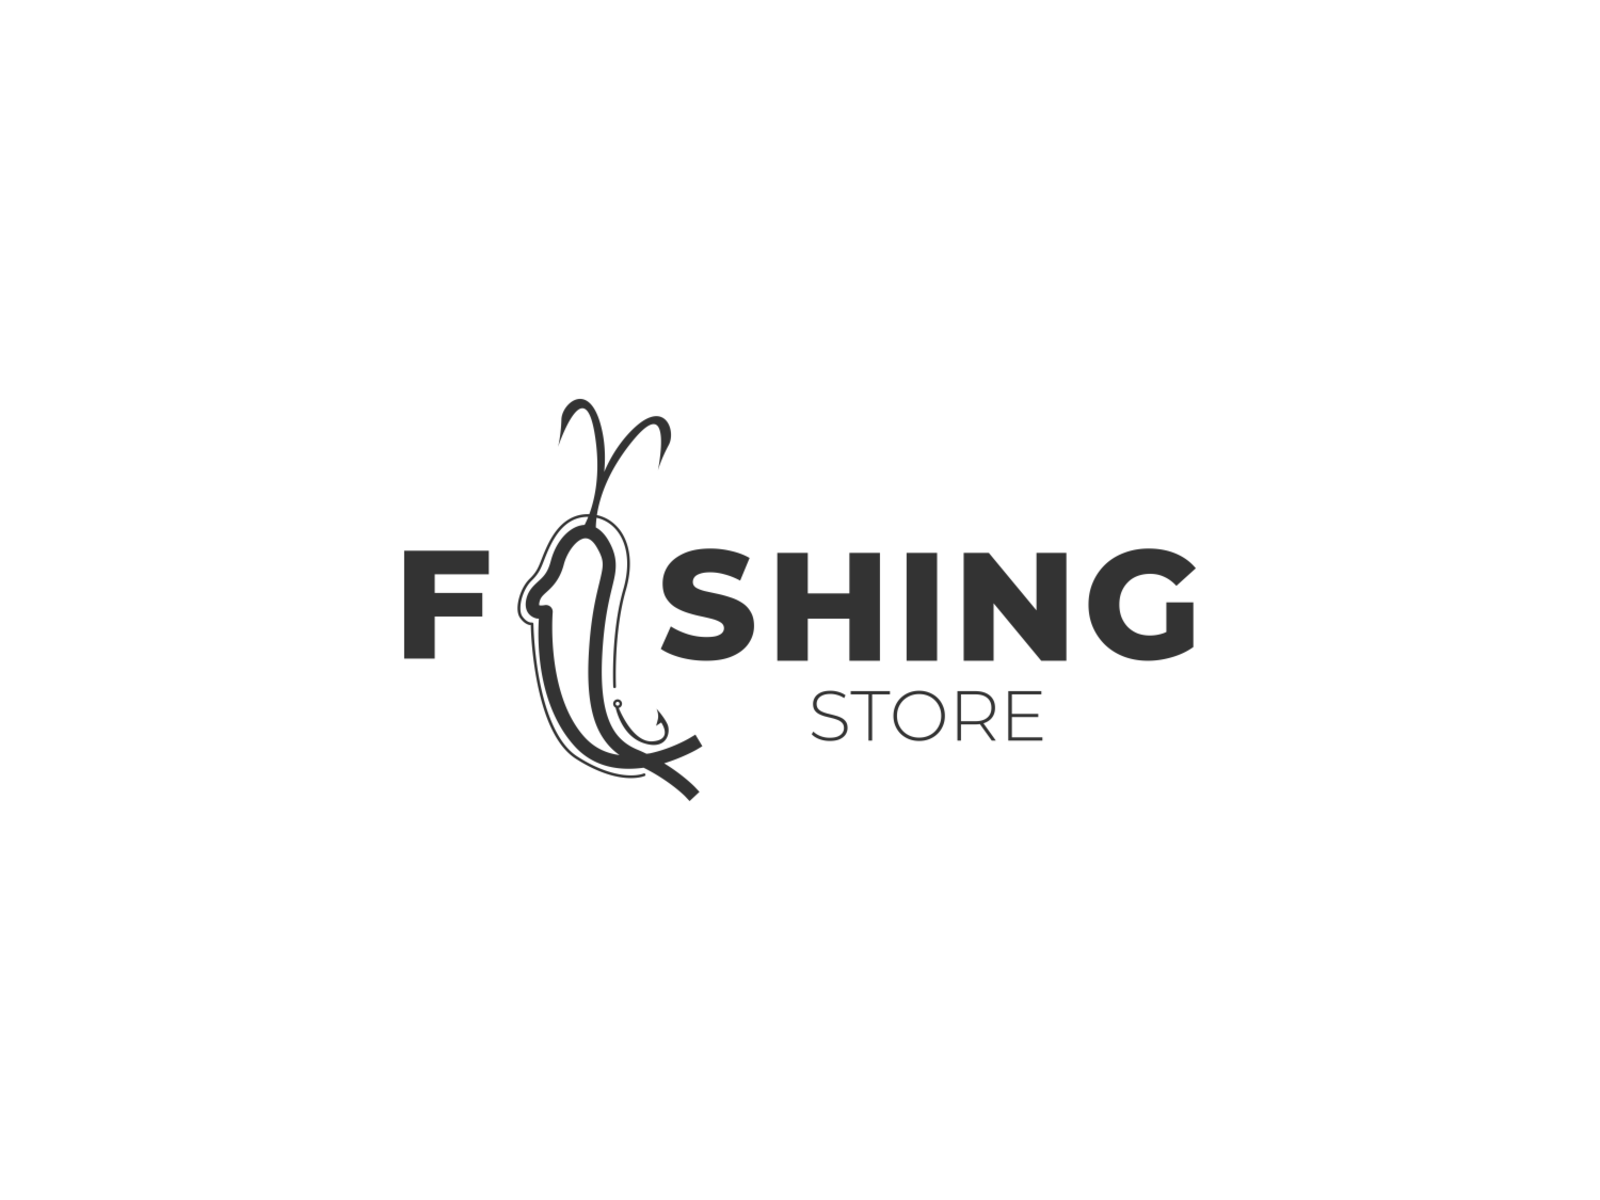 Fishing Store Logo by Farhan Habibi on Dribbble